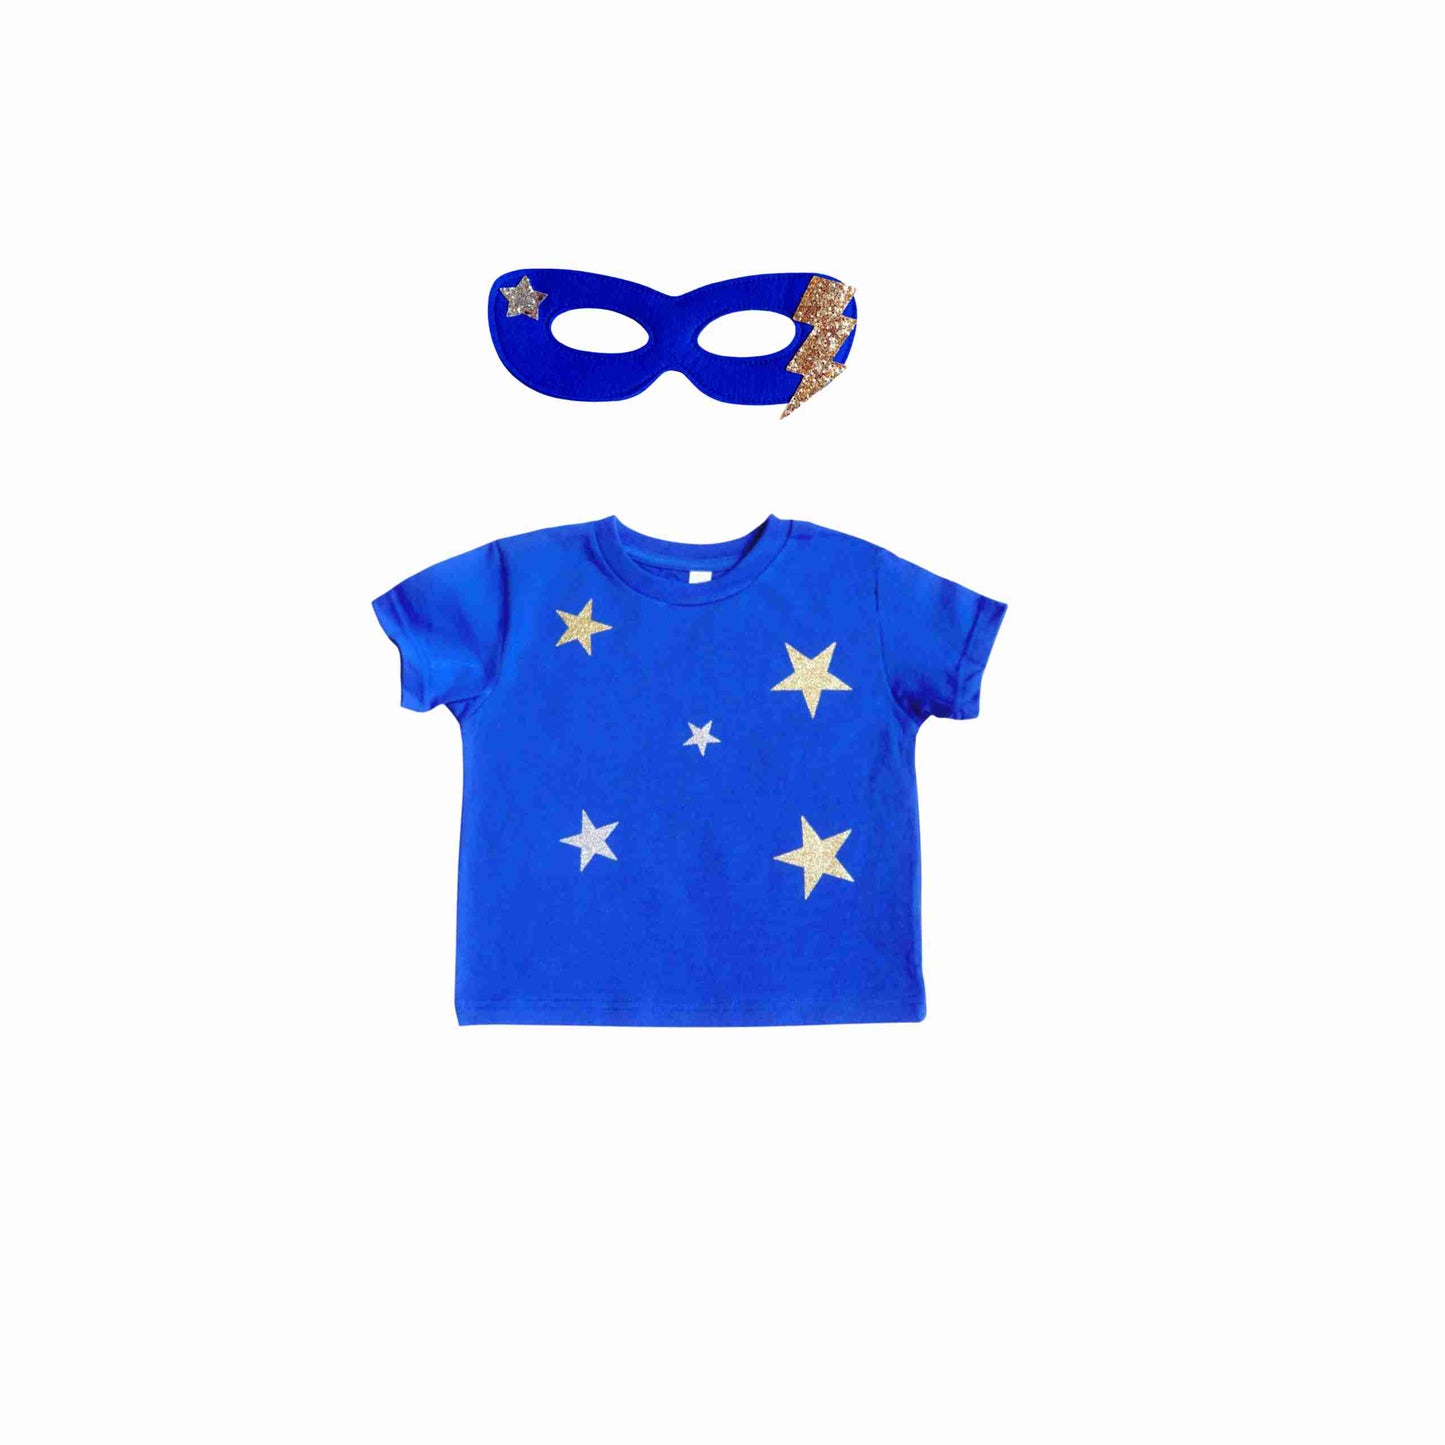 All Star Superhero T-Shirt, Blue